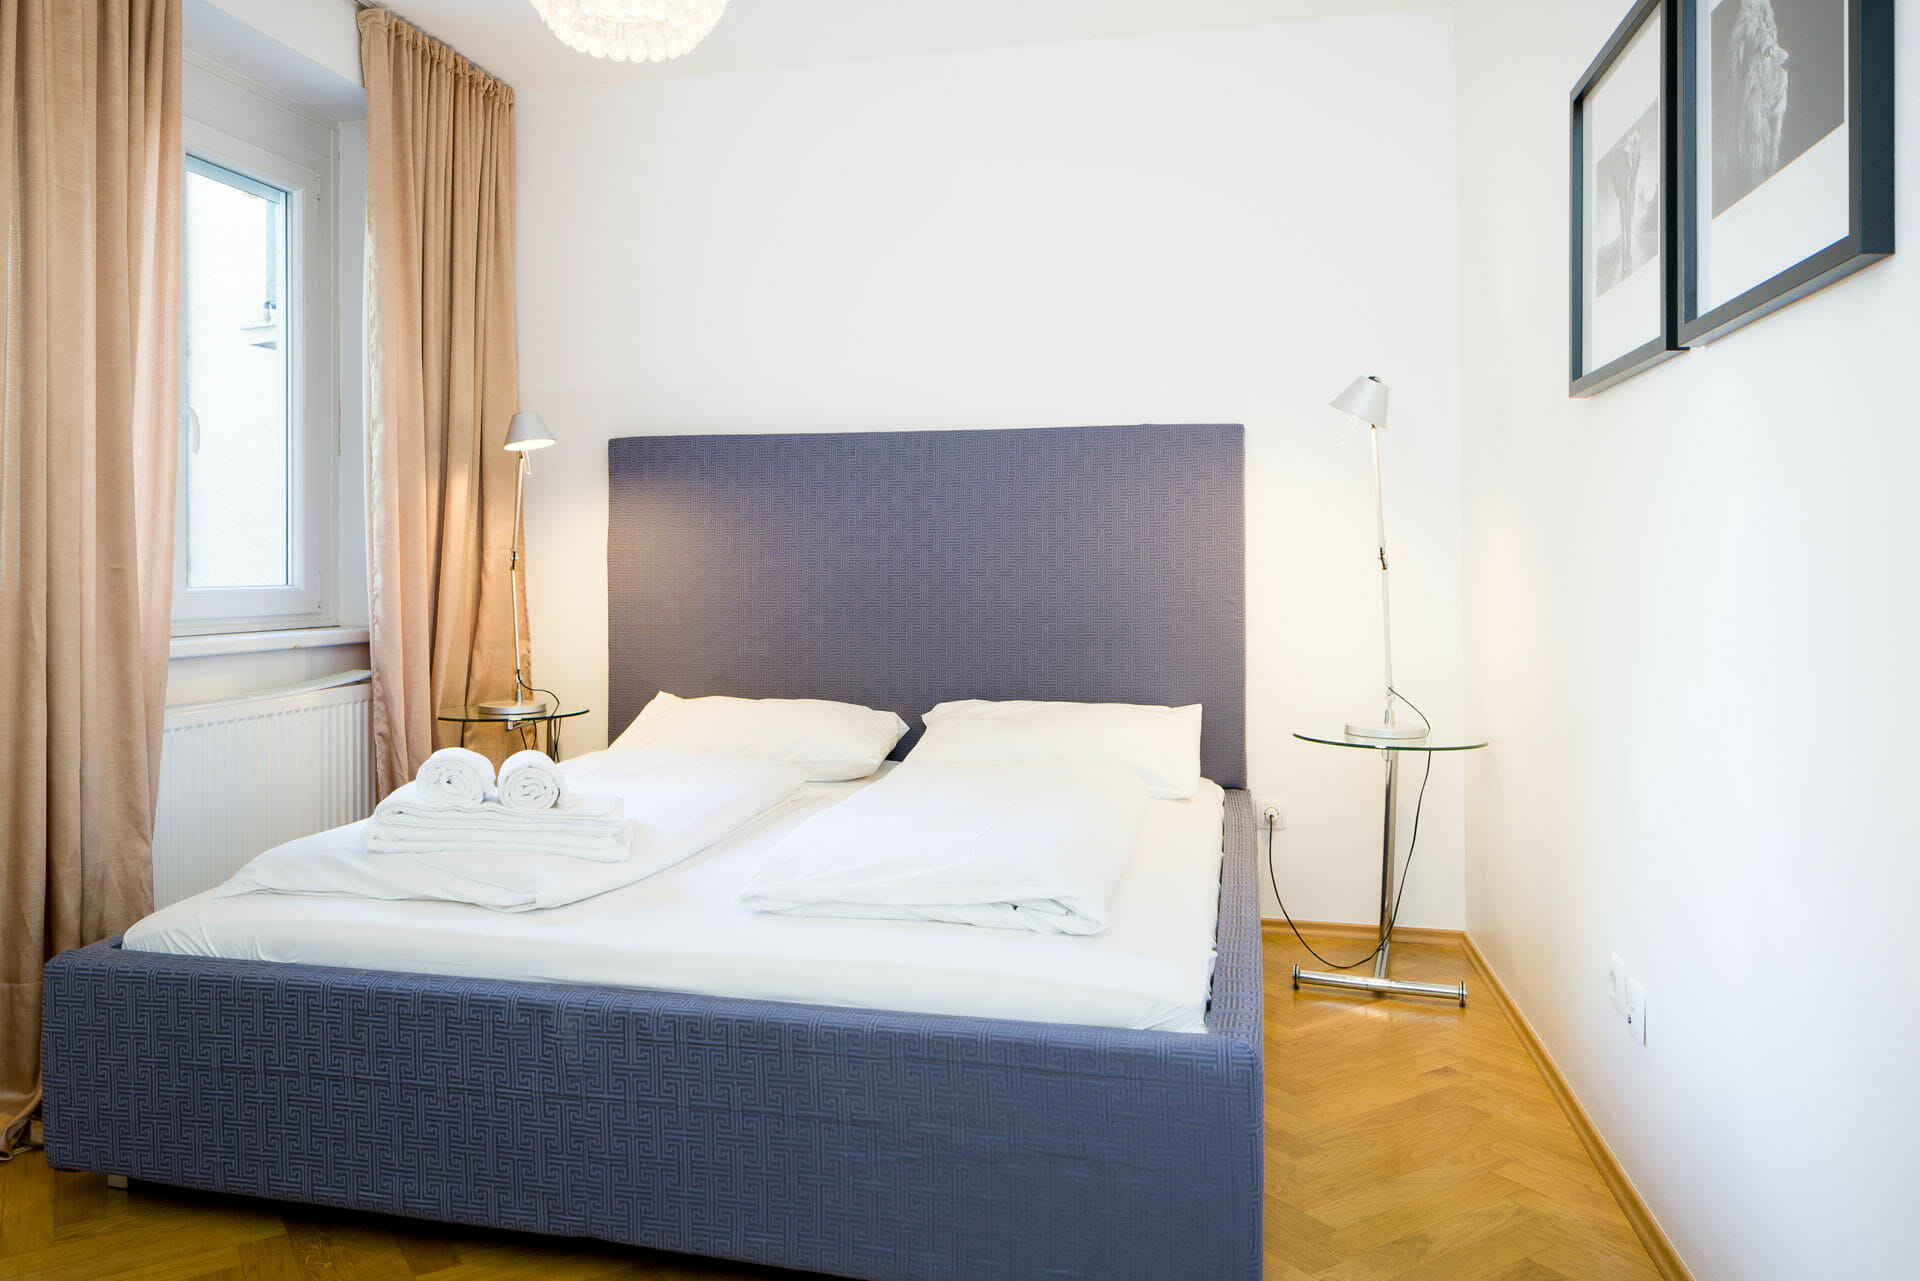 Prestige Apartments in Vienna Spacious Apartment.Apartments size in m²: 80
District: 1090 Alsergrund
Bedroom: 2.